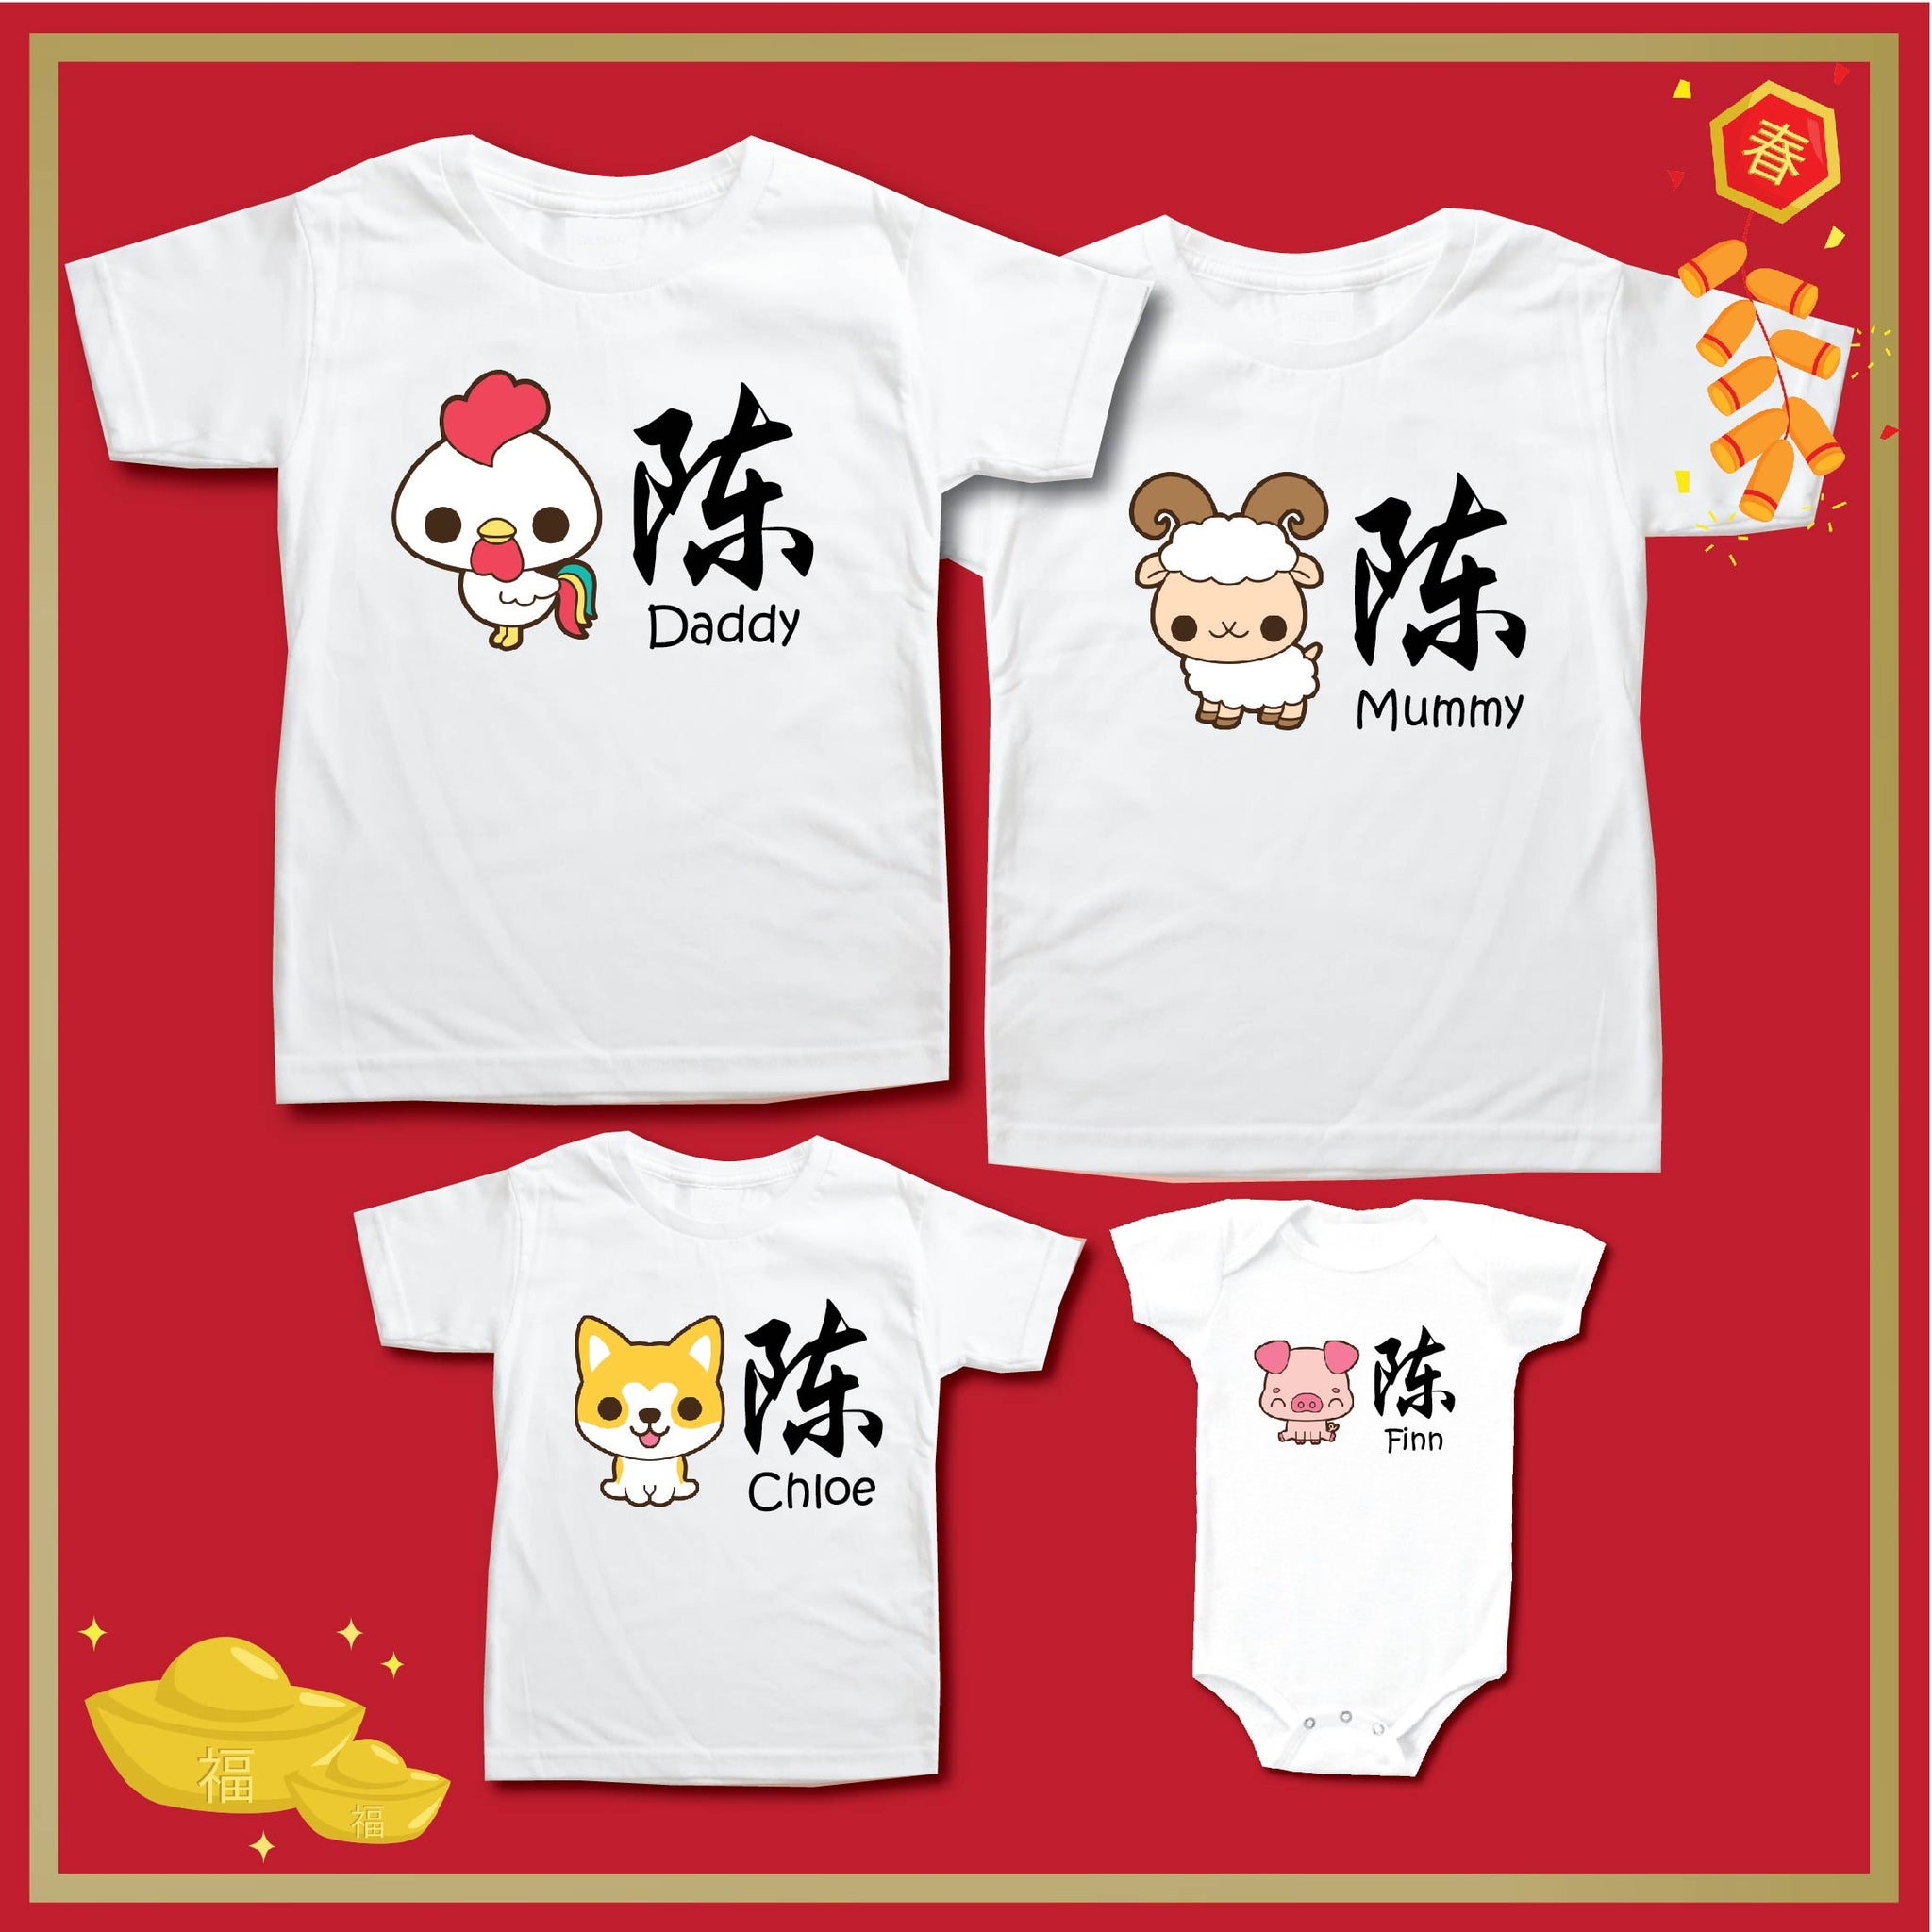 Personalised Family Tee Shirts - CNY Zodiac Family 2 (12 Designs)